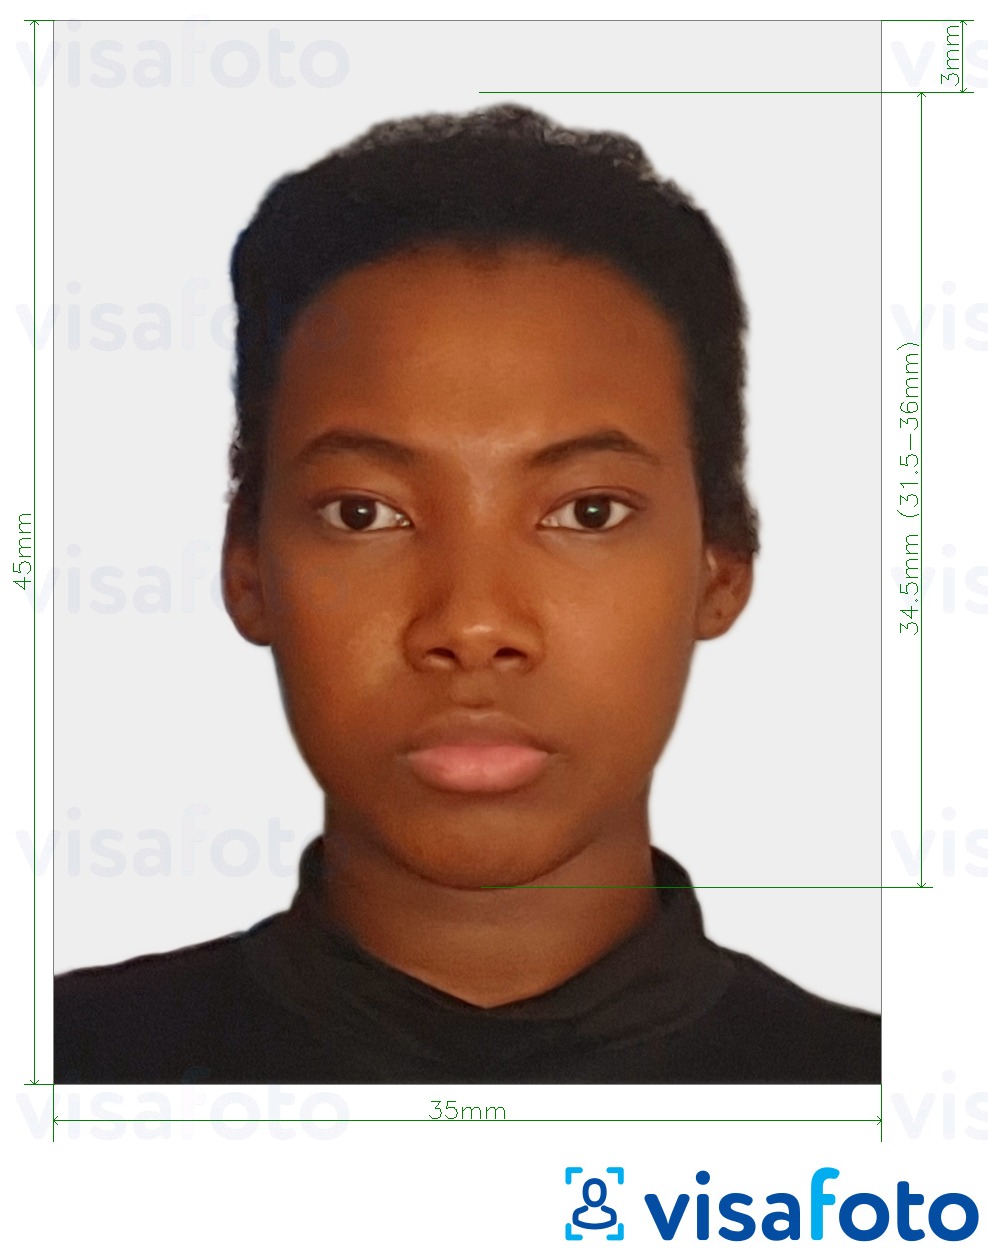 Contoh foto untuk Pasport Afrika Selatan 35x45 mm (3.5x4.5 sm) dengan spesifikasi saiz yang tepat.